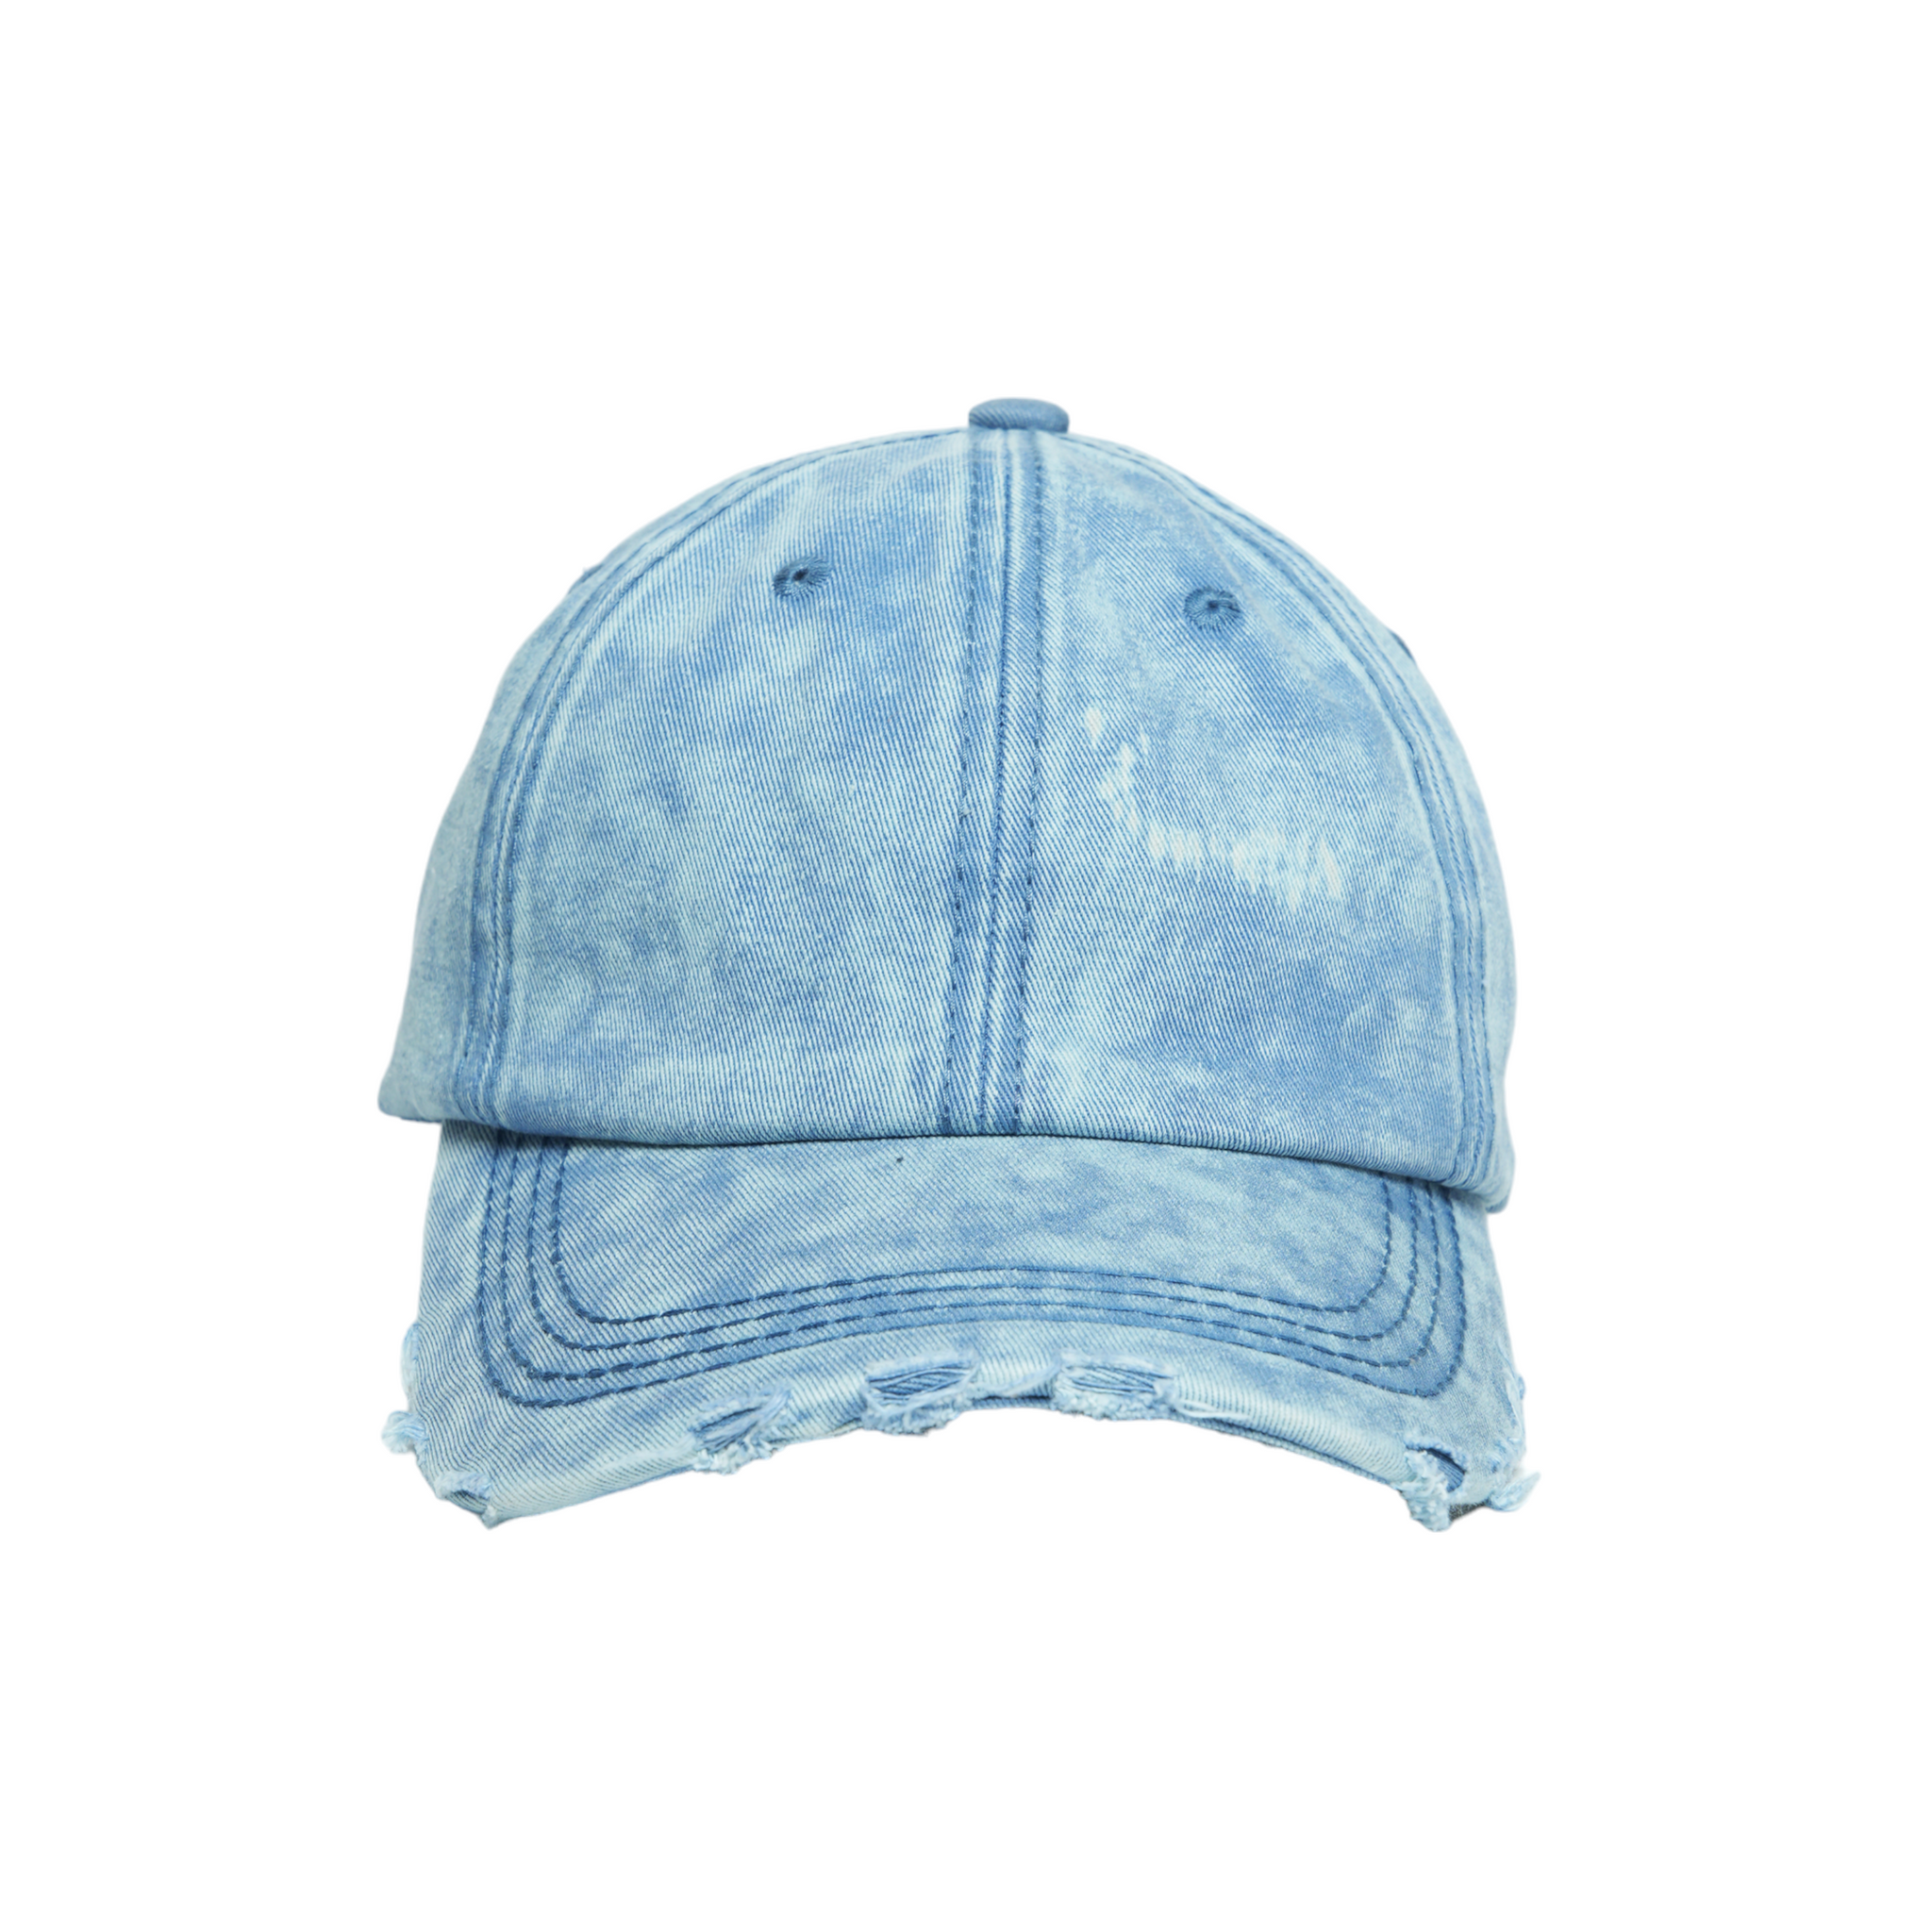 Chokore Distressed Denim Baseball Cap (Light Blue)